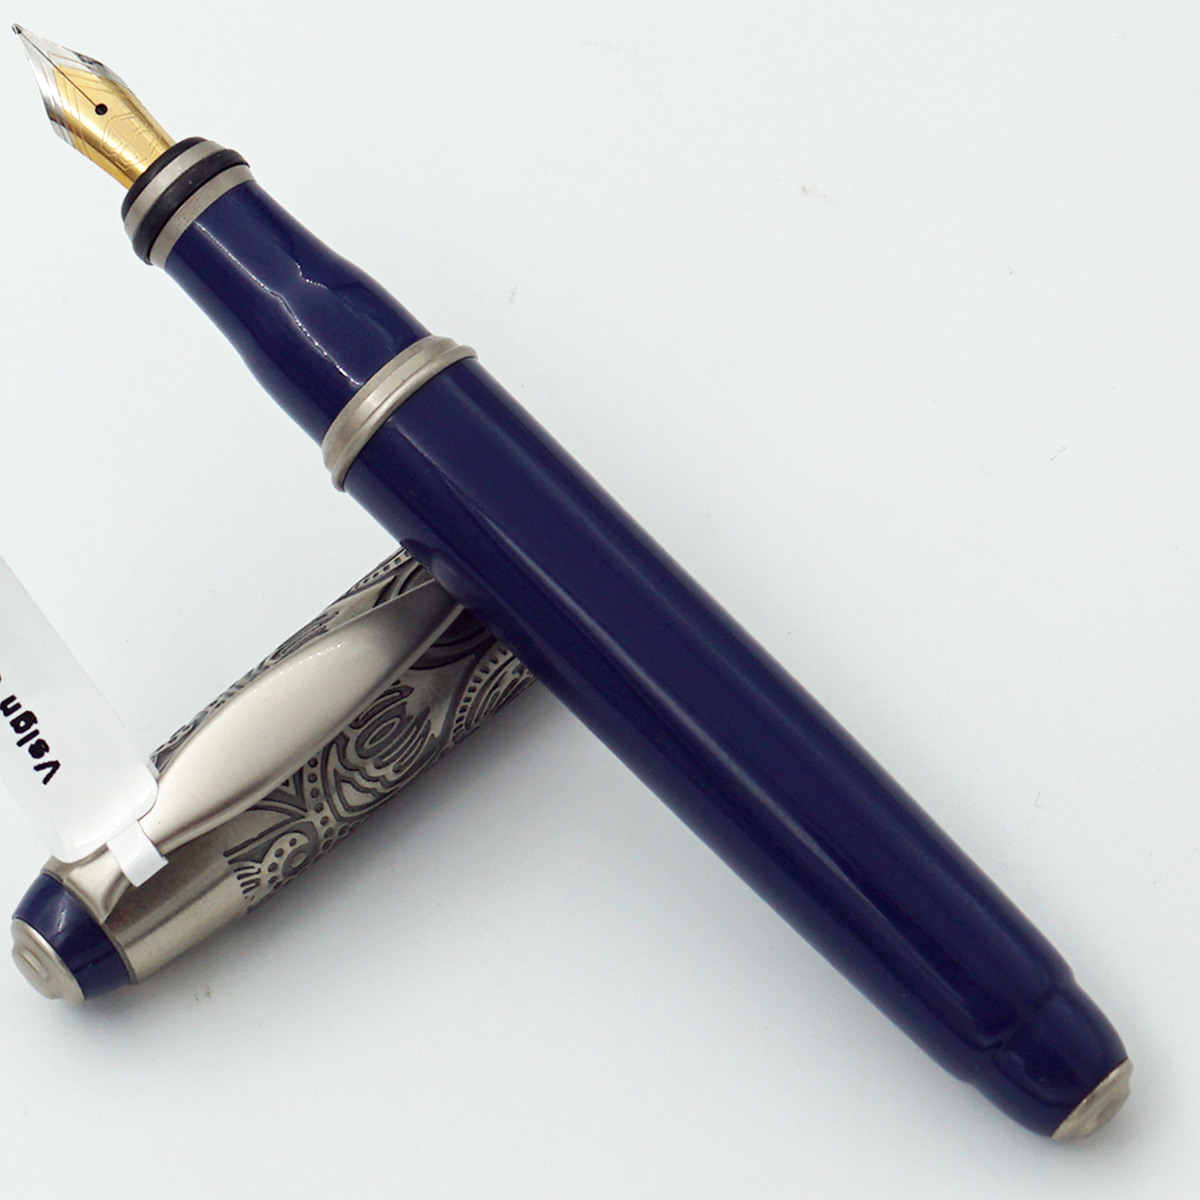 Vsign SB Dark Blue Color Body With Silver Color Designed Cap Medium Nib Converter Type Fountain Pen SKU 24446